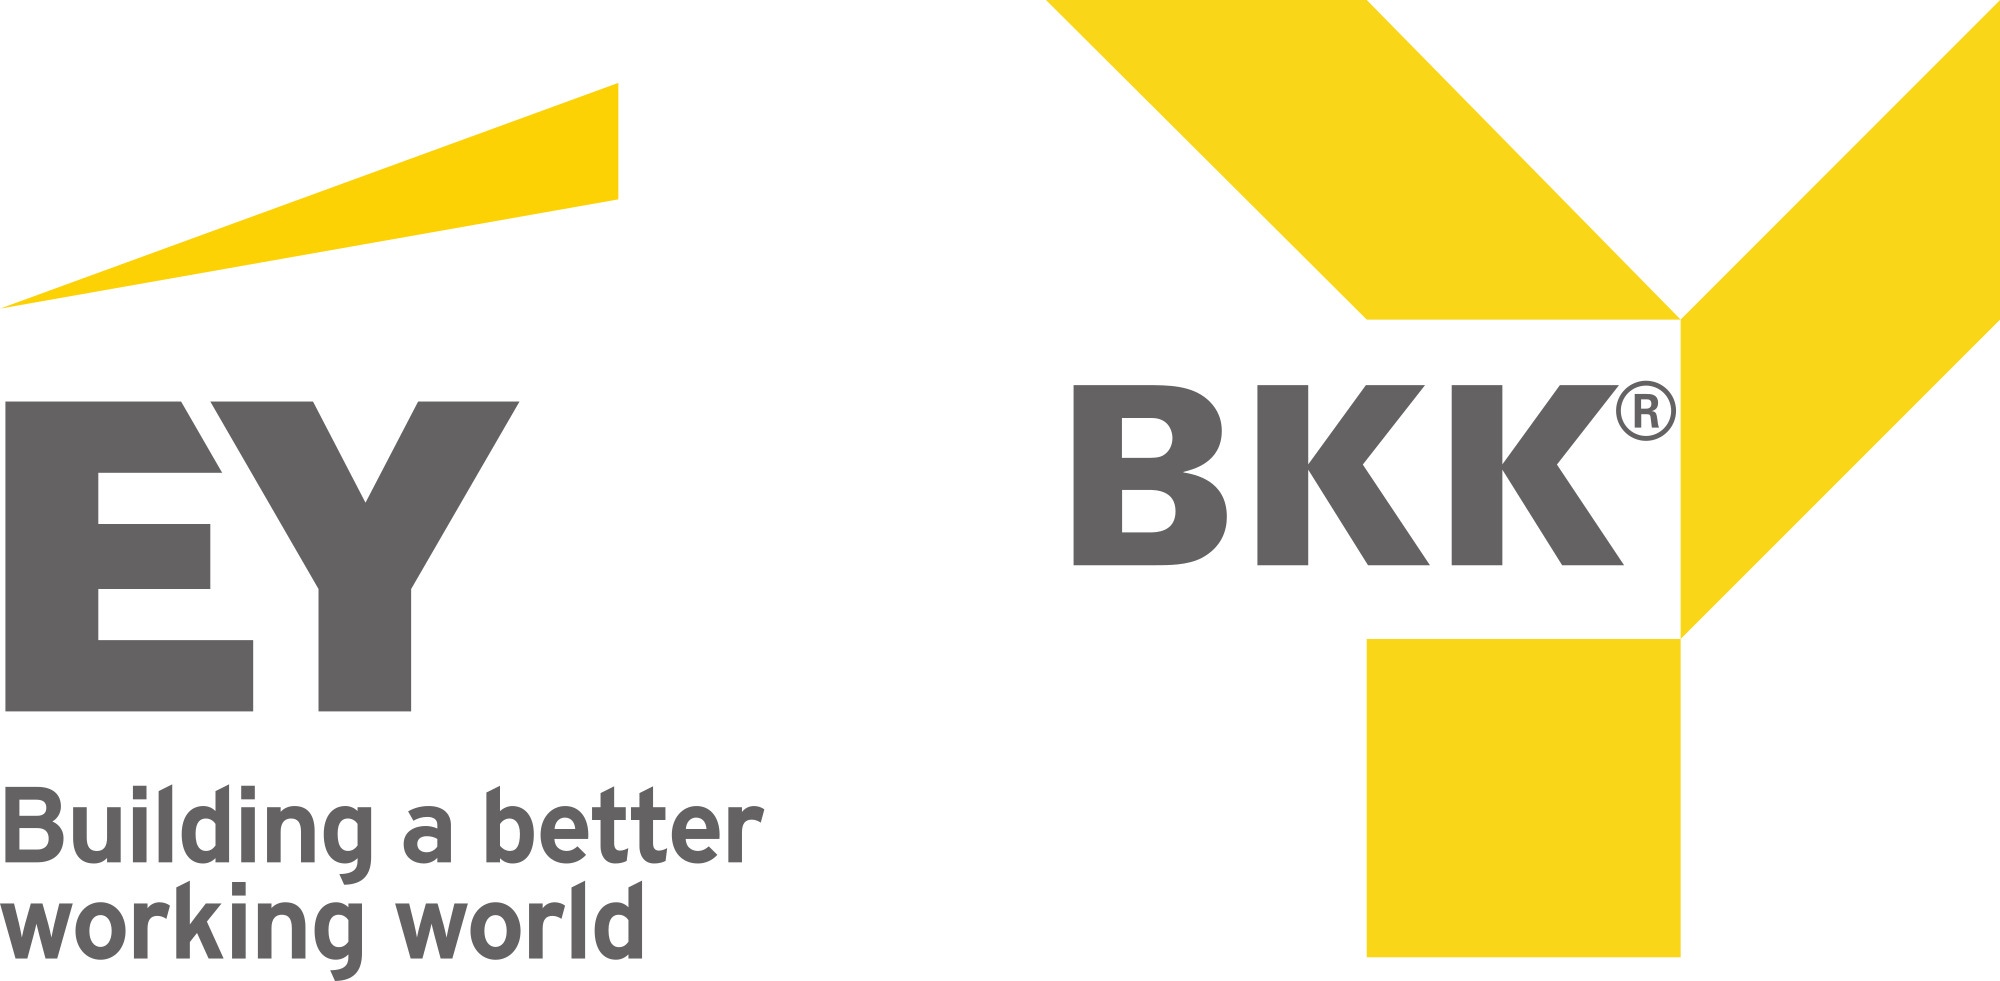 Ey Logo - File:Ernst & Young BKK logo.svg - Wikimedia Commons